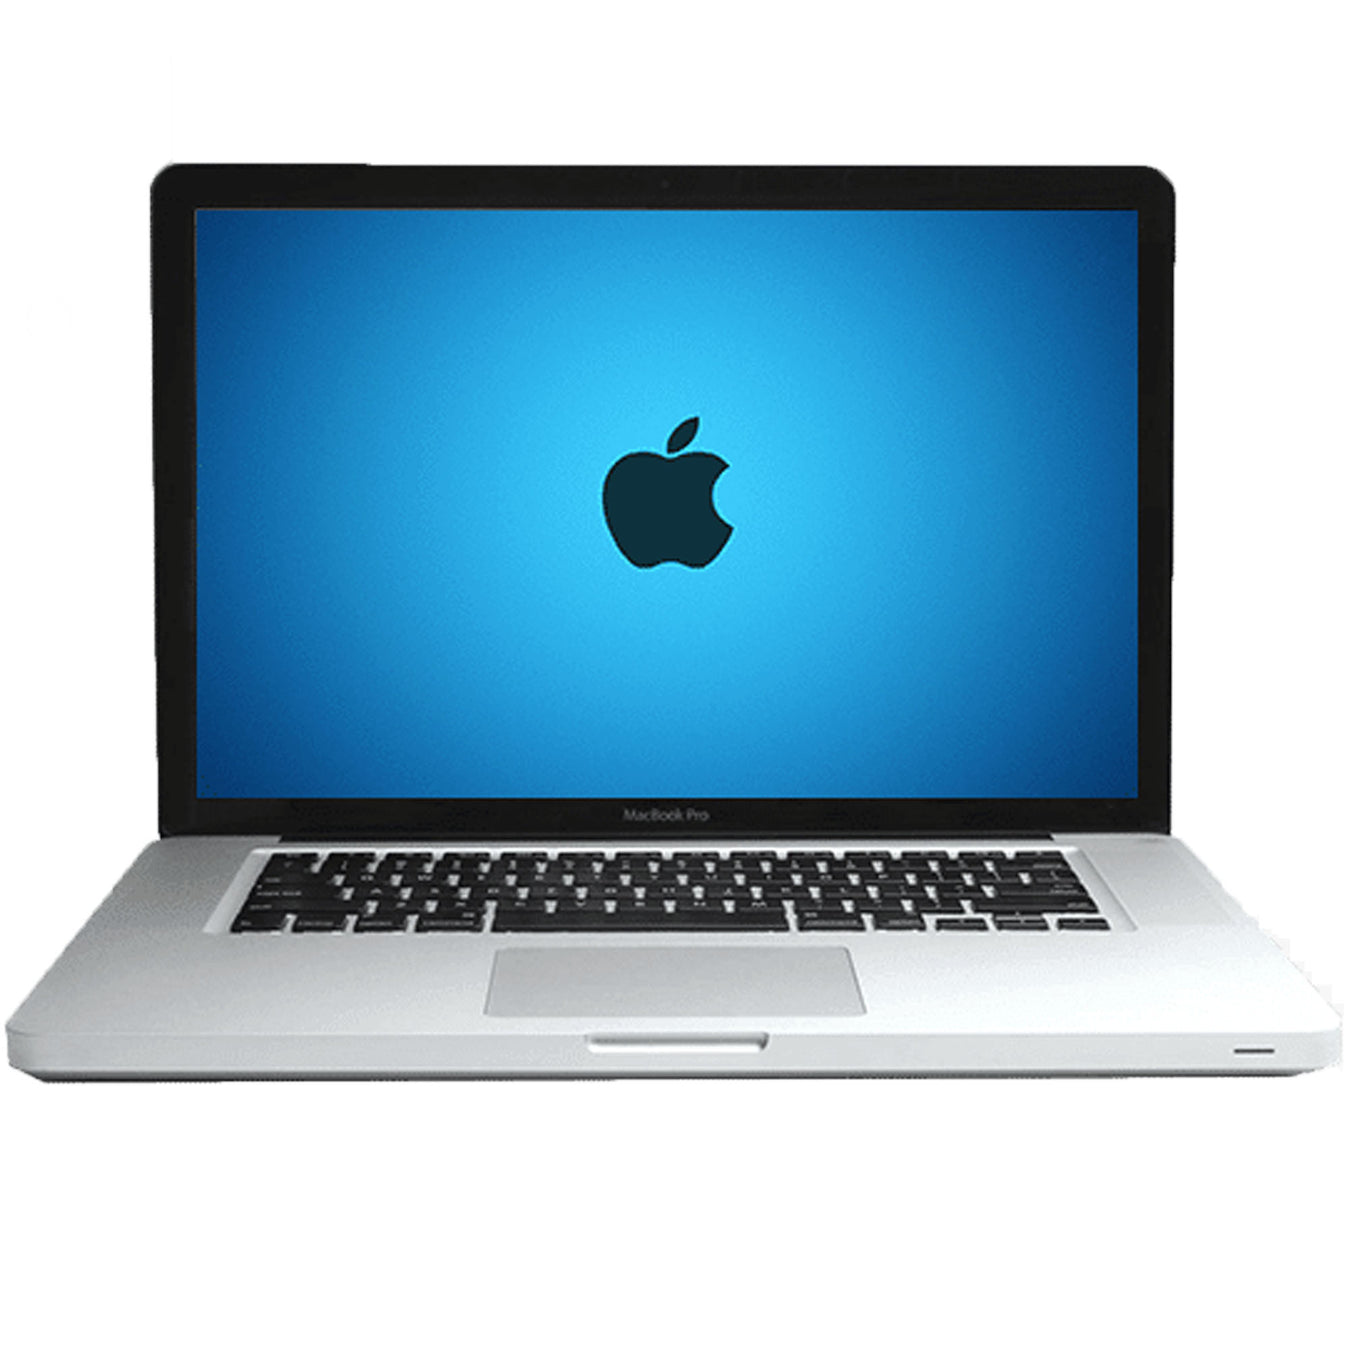 Apple MacBook Pro 15" A1286 Parts